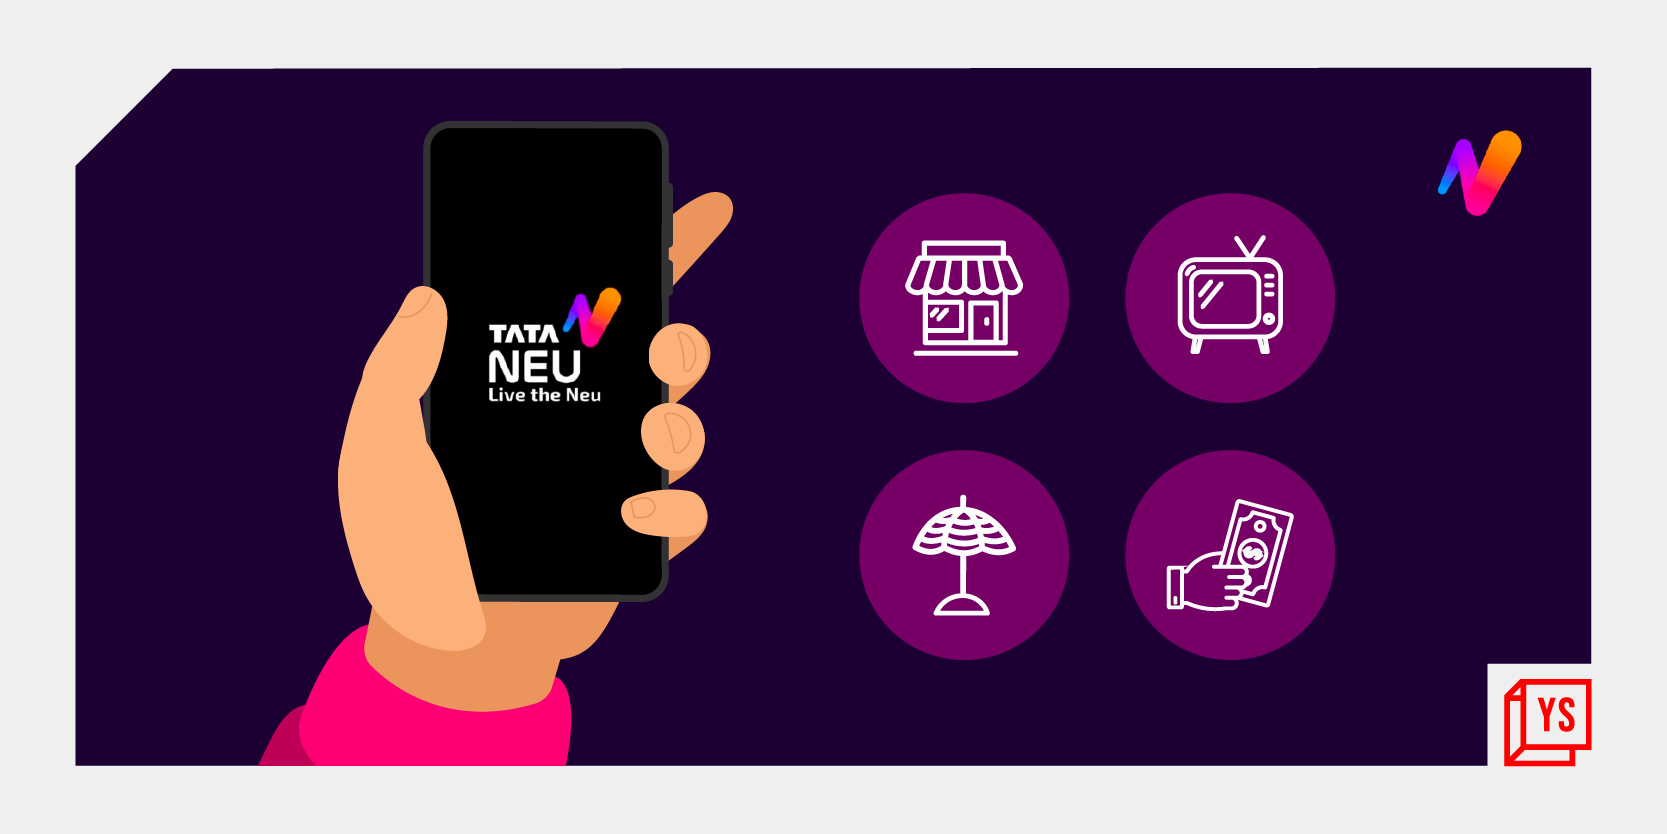 Tata Neu super app to launch online food ordering via ONDC: report